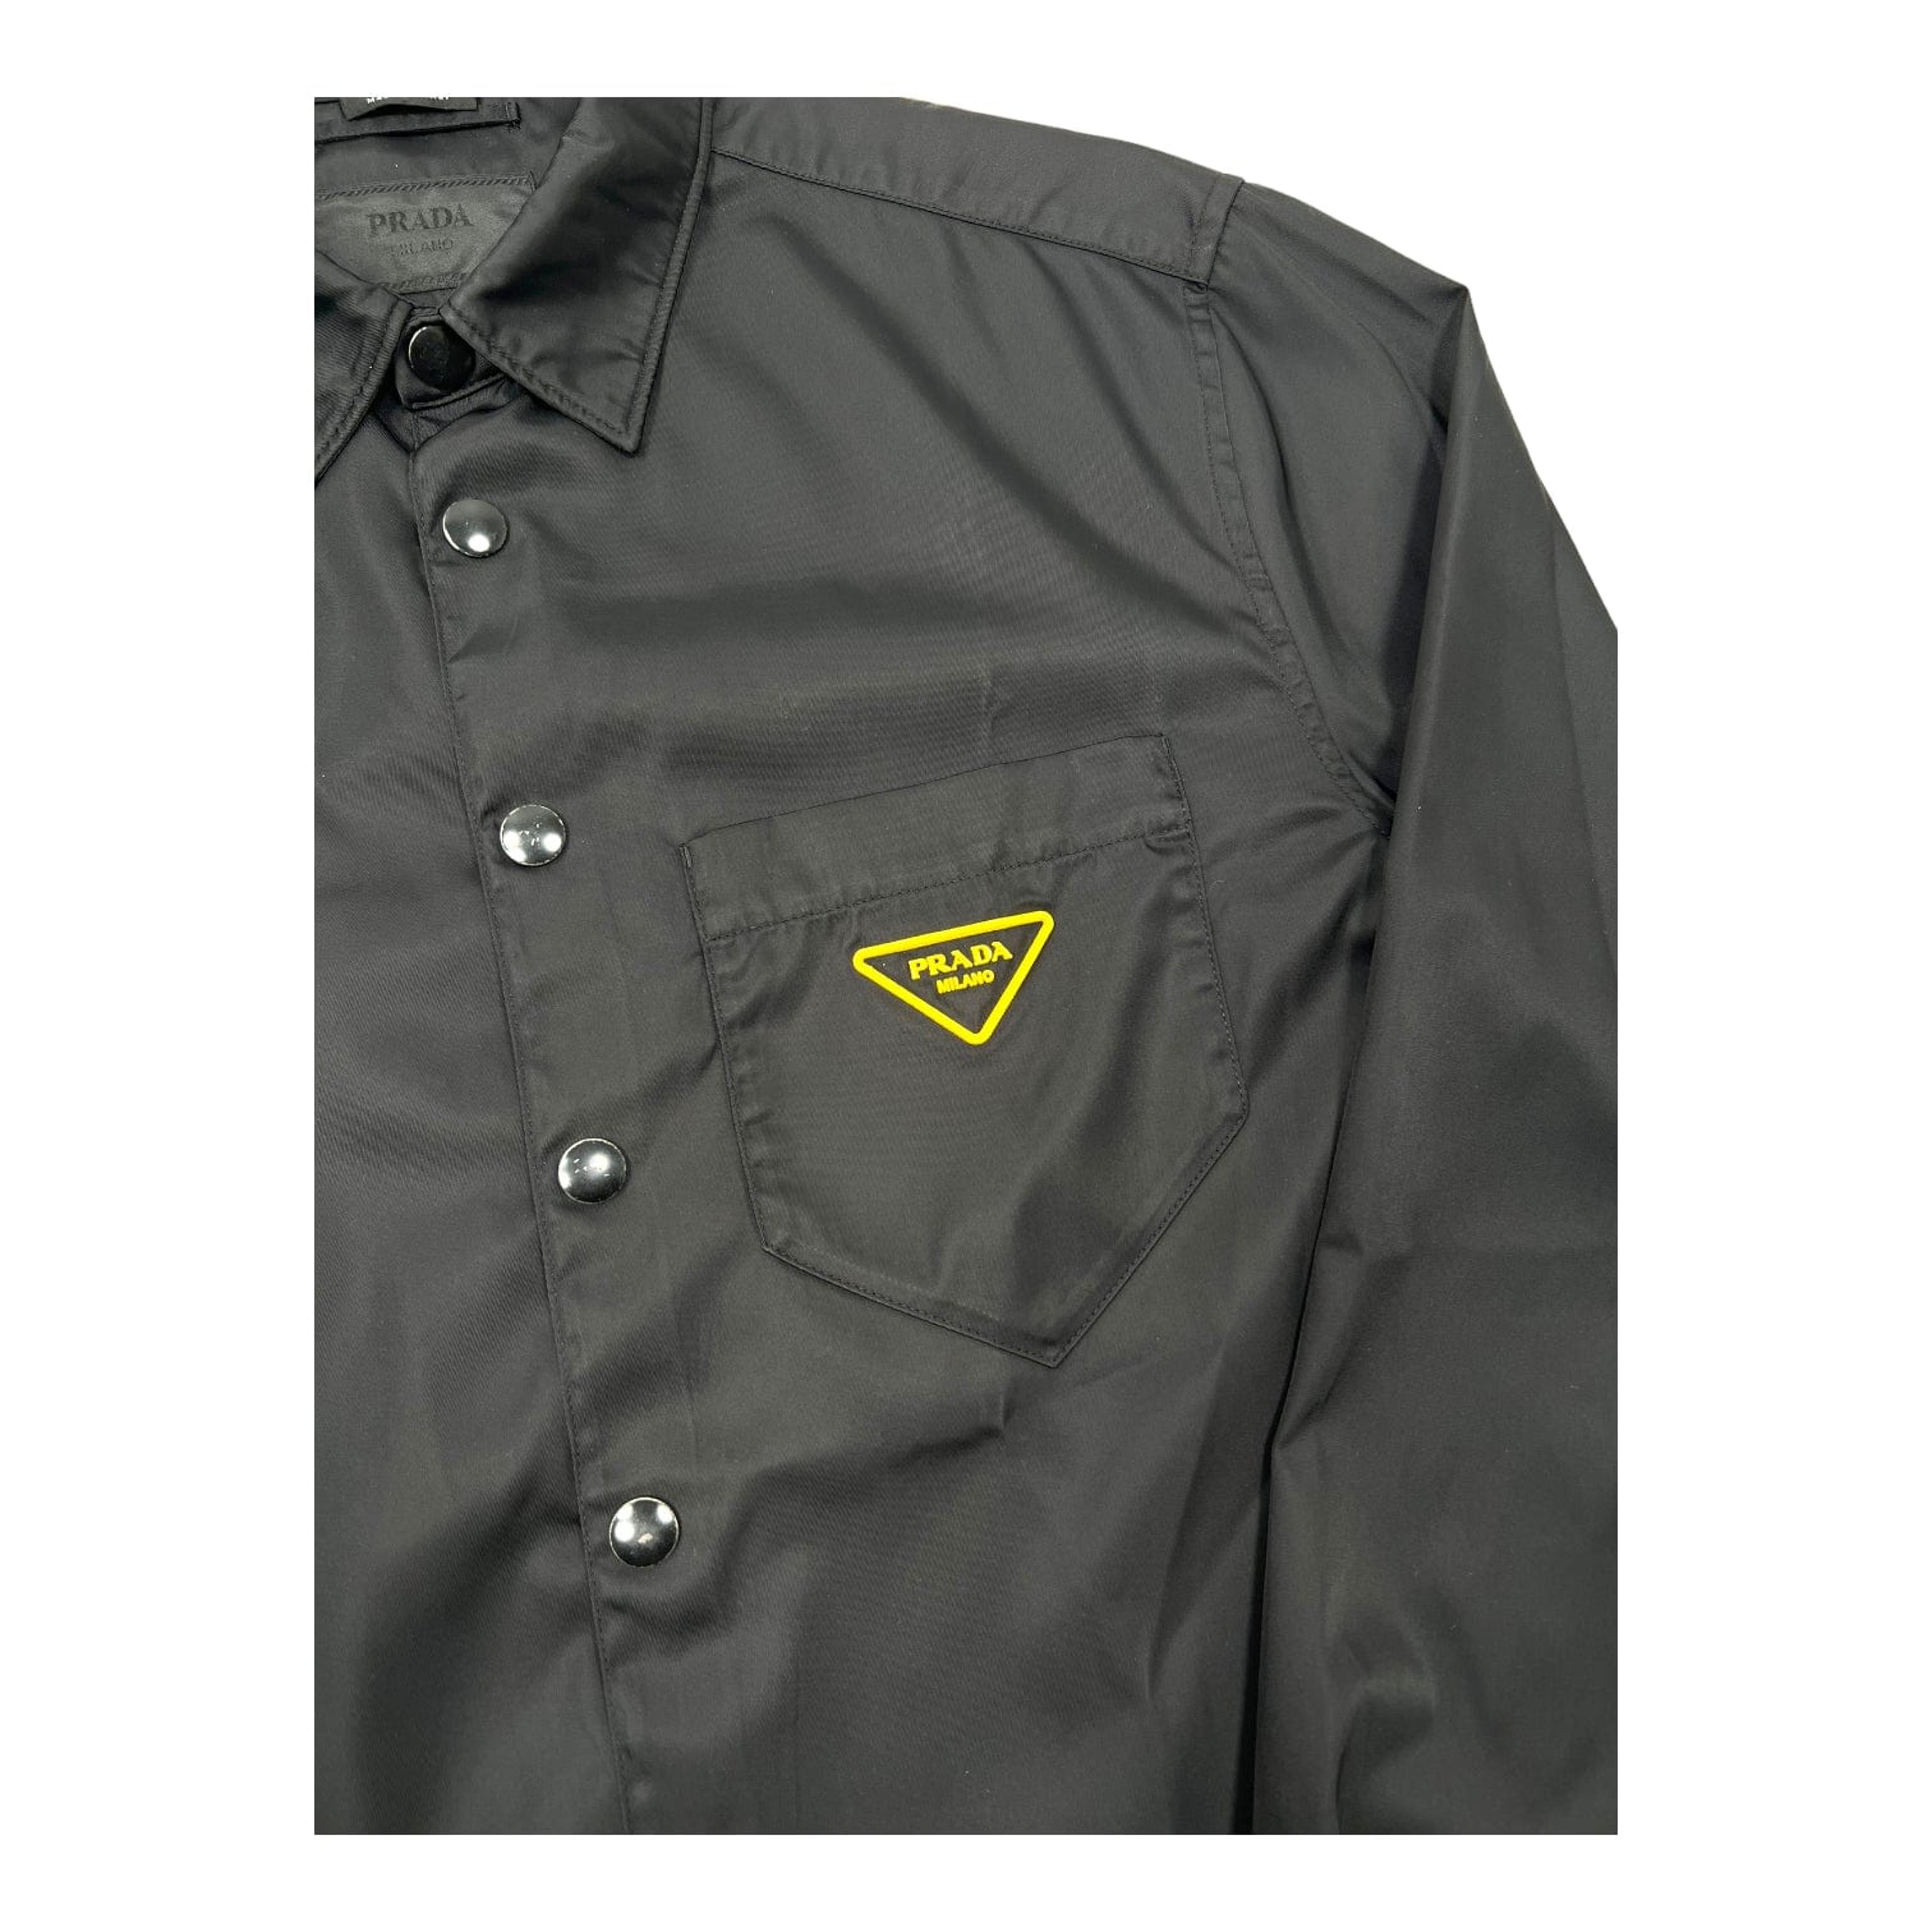 Alternate View 2 of Prada Re Nylon Button Up Shirt Black Yellow Pre-Owned